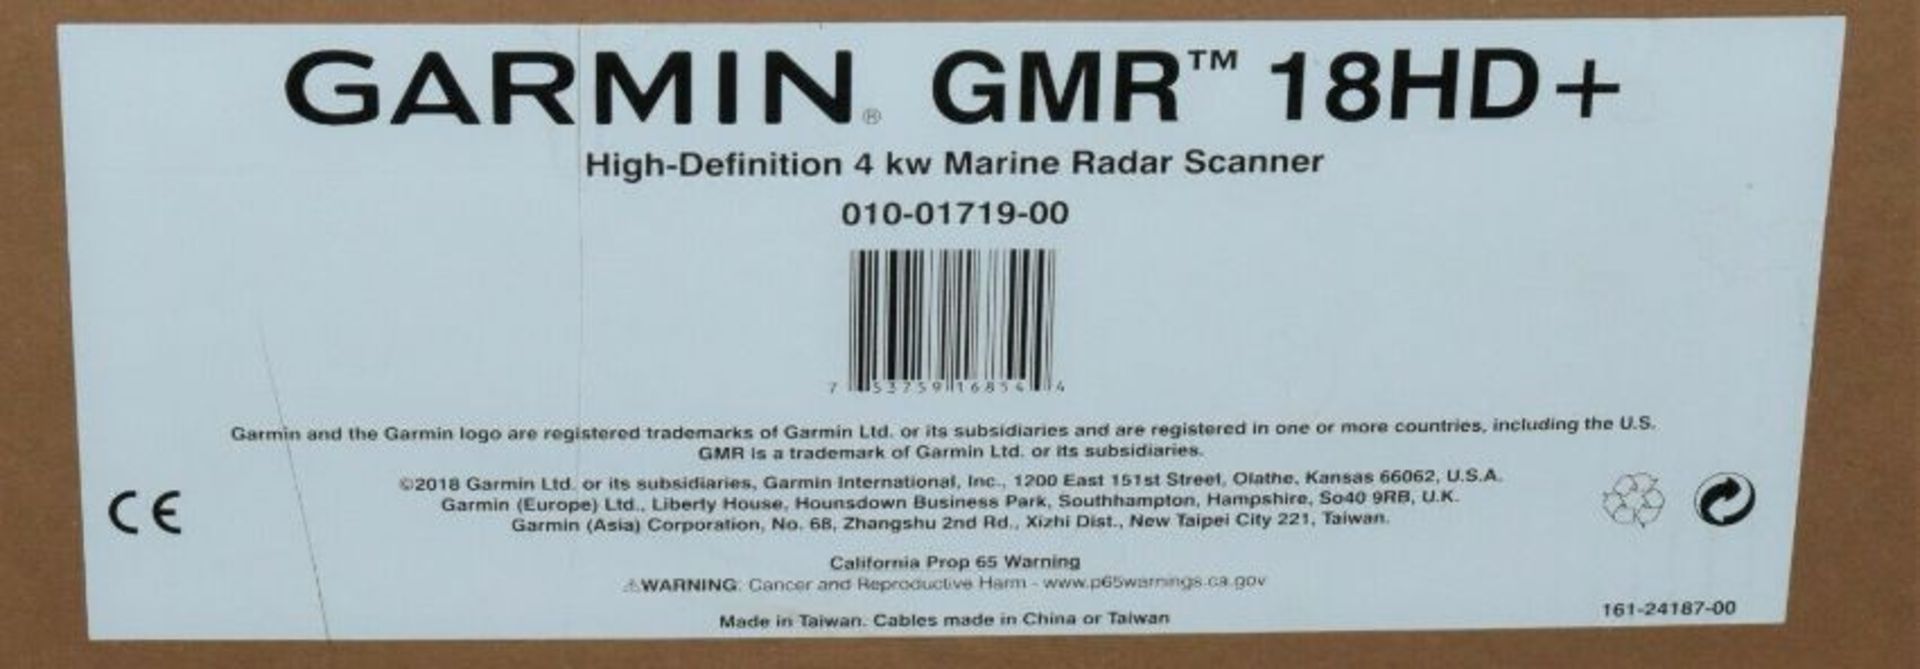 1 x Garmin GMR 18 HD+ Radome Compact Dome Dynamic Radar (18" - 4 kW) - Model Number 010-01719-00 - - Image 5 of 5